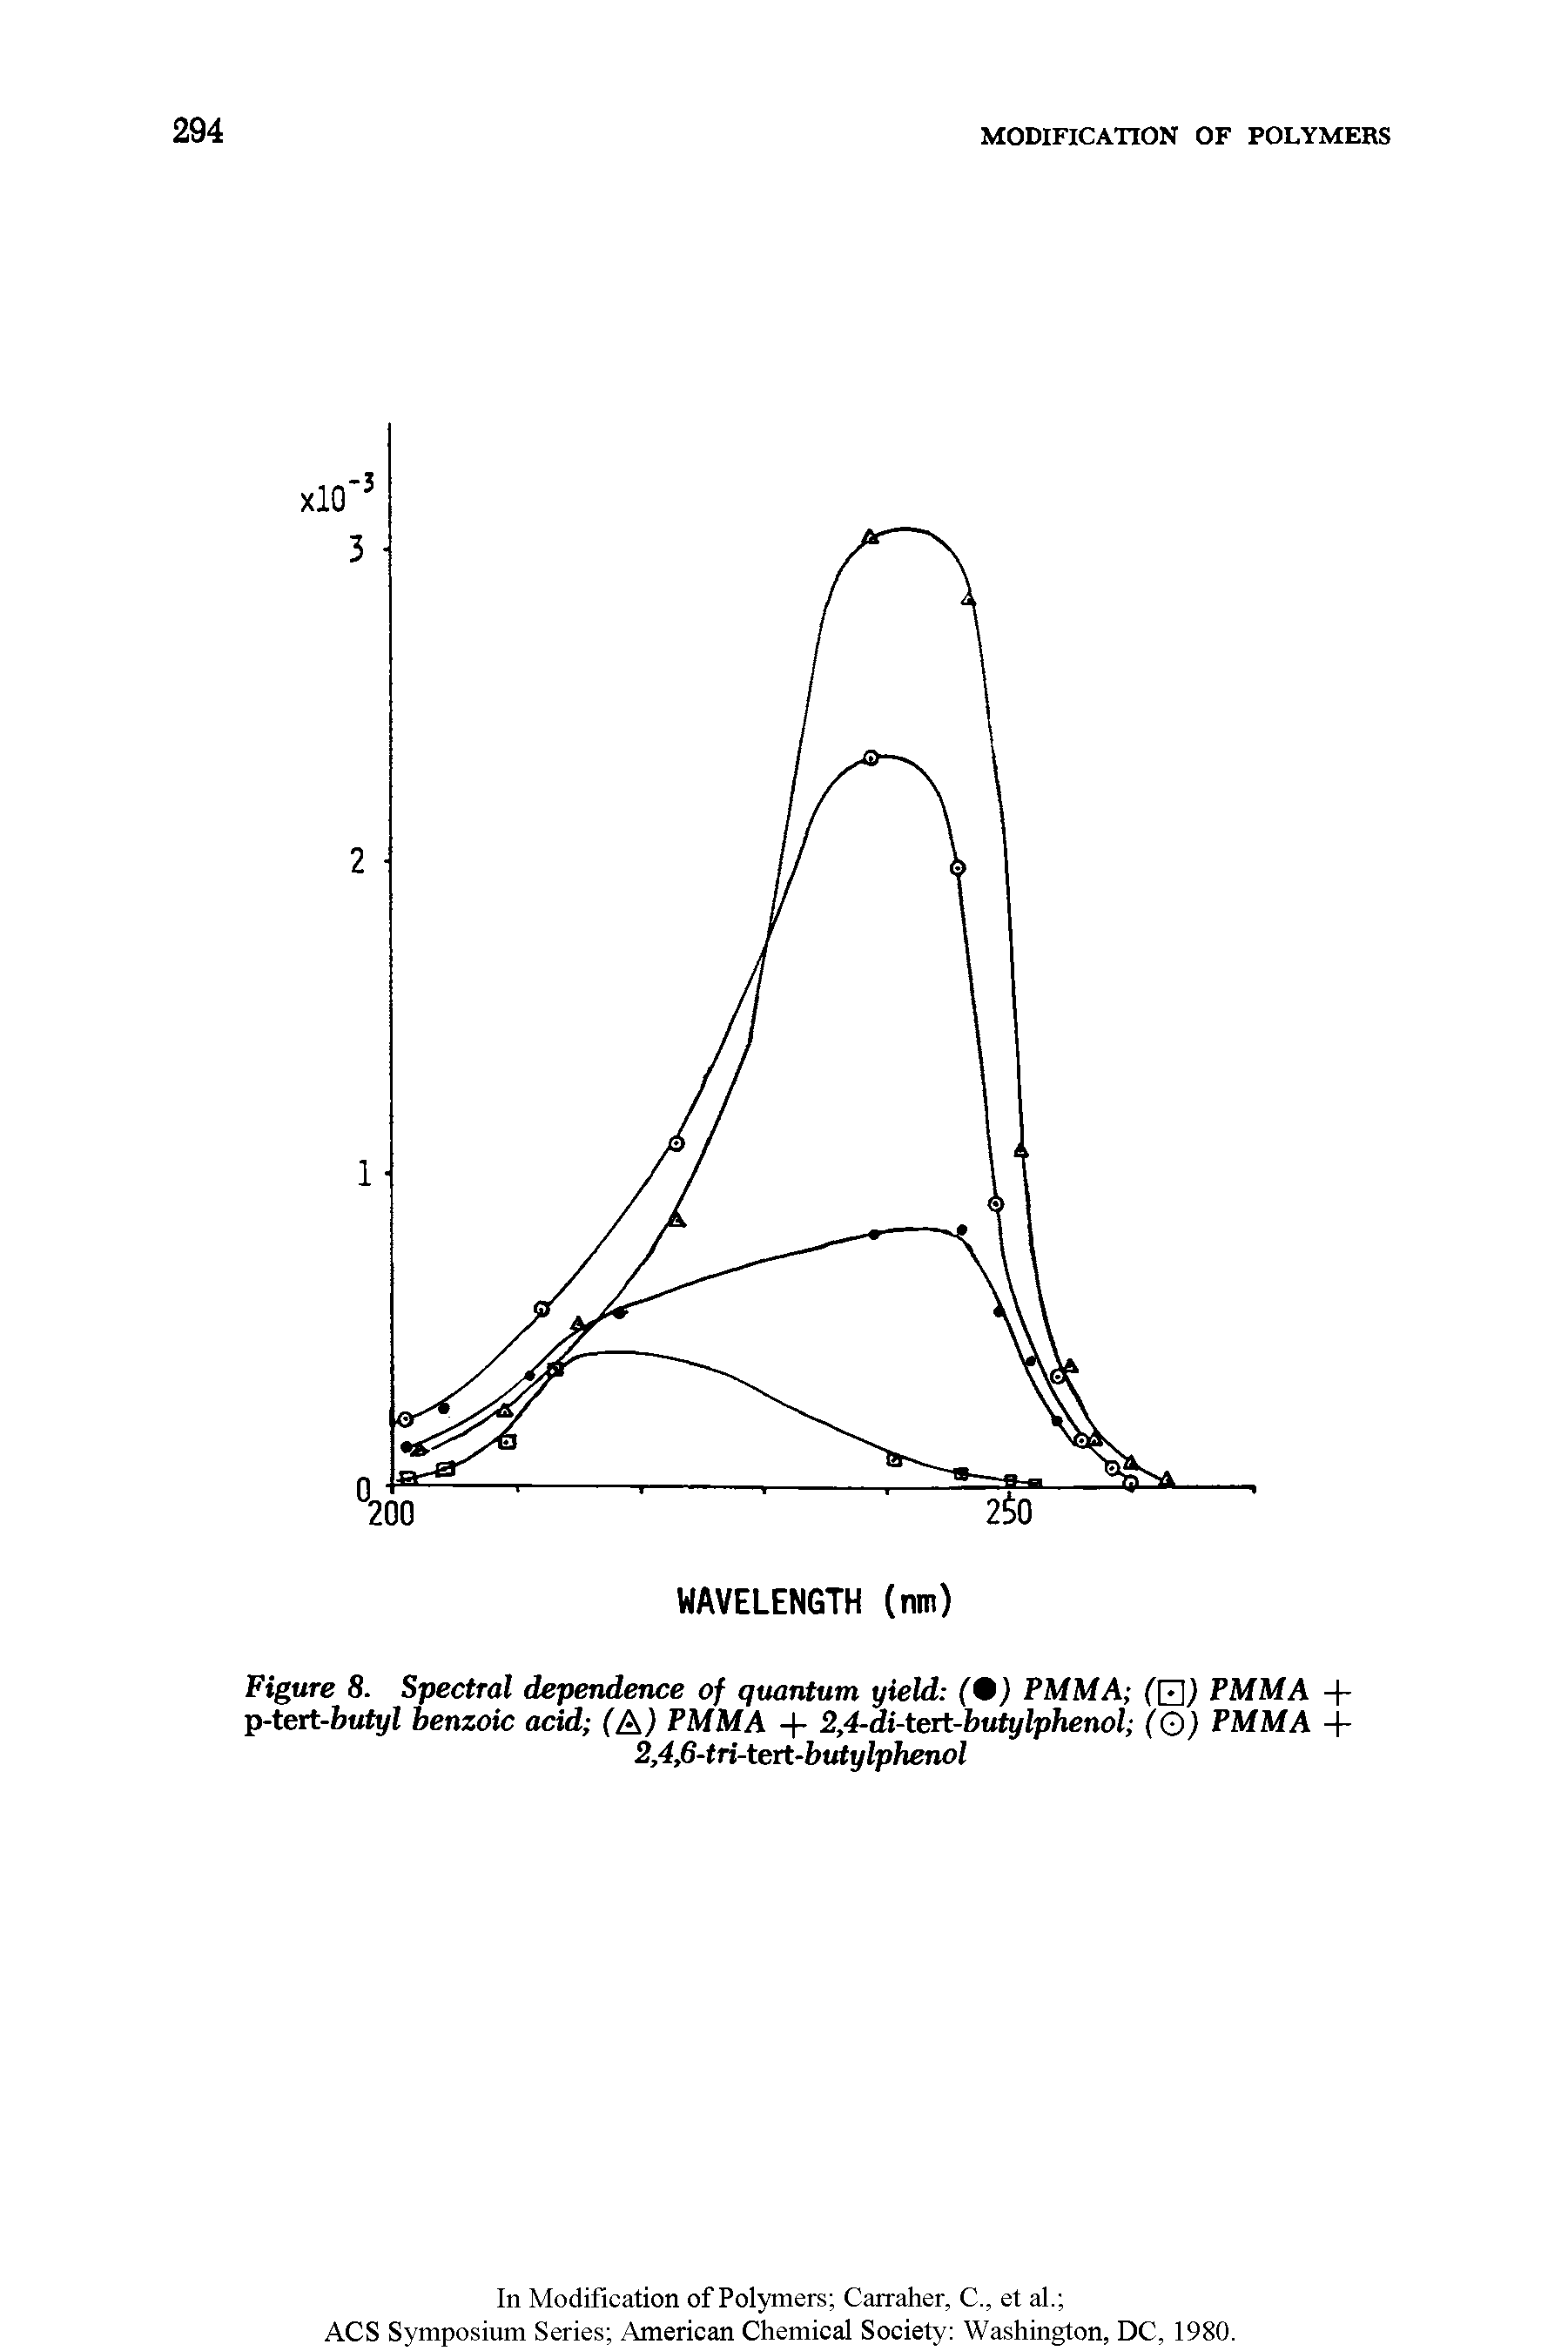 Figure 8. Spectral dependence of quantum, yield (0) PMMA ( ) PMMA + p-tert-butyl benzoic acid (A PMMA + 2,4-di-tert-butylphenol (Q) PMMA + 2,4,6-tri-tert-butylphenol...